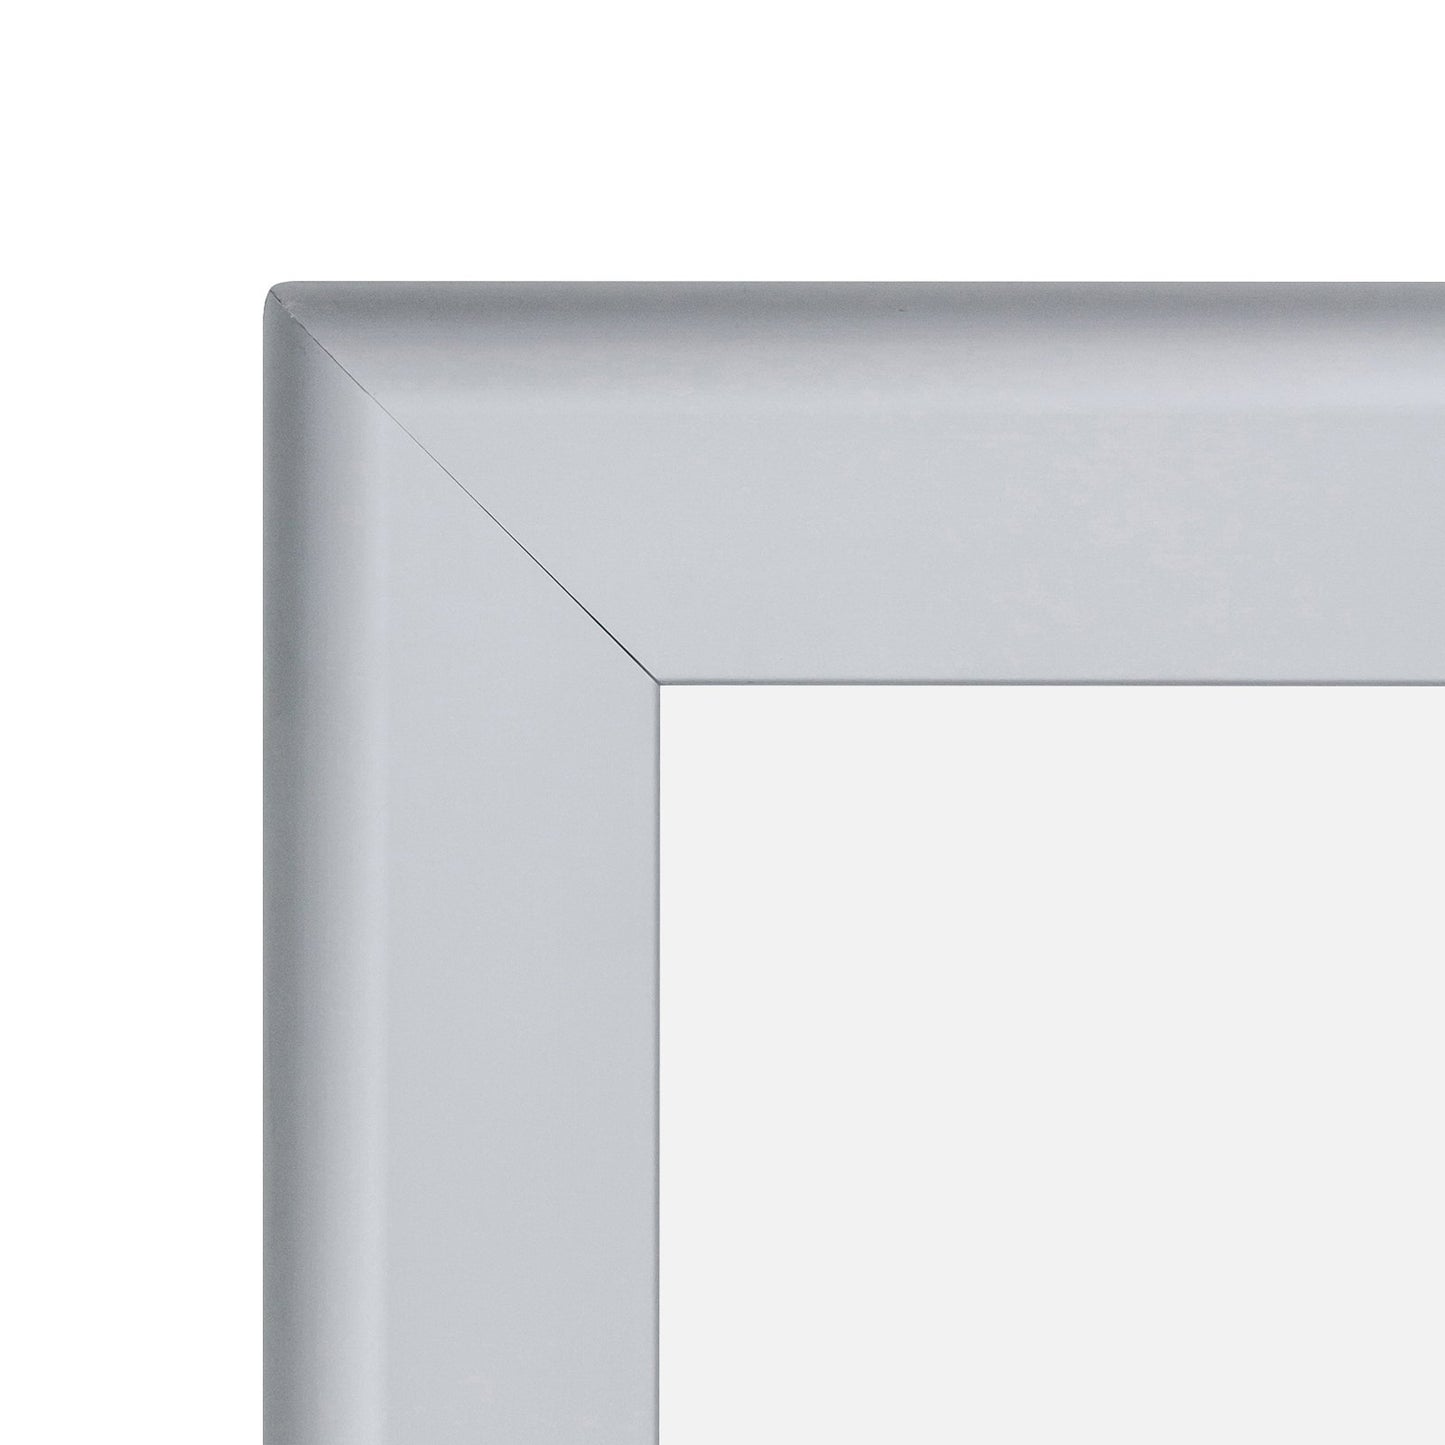 20x30 Silver SnapeZo® Snap Frame - 1.7" Profile